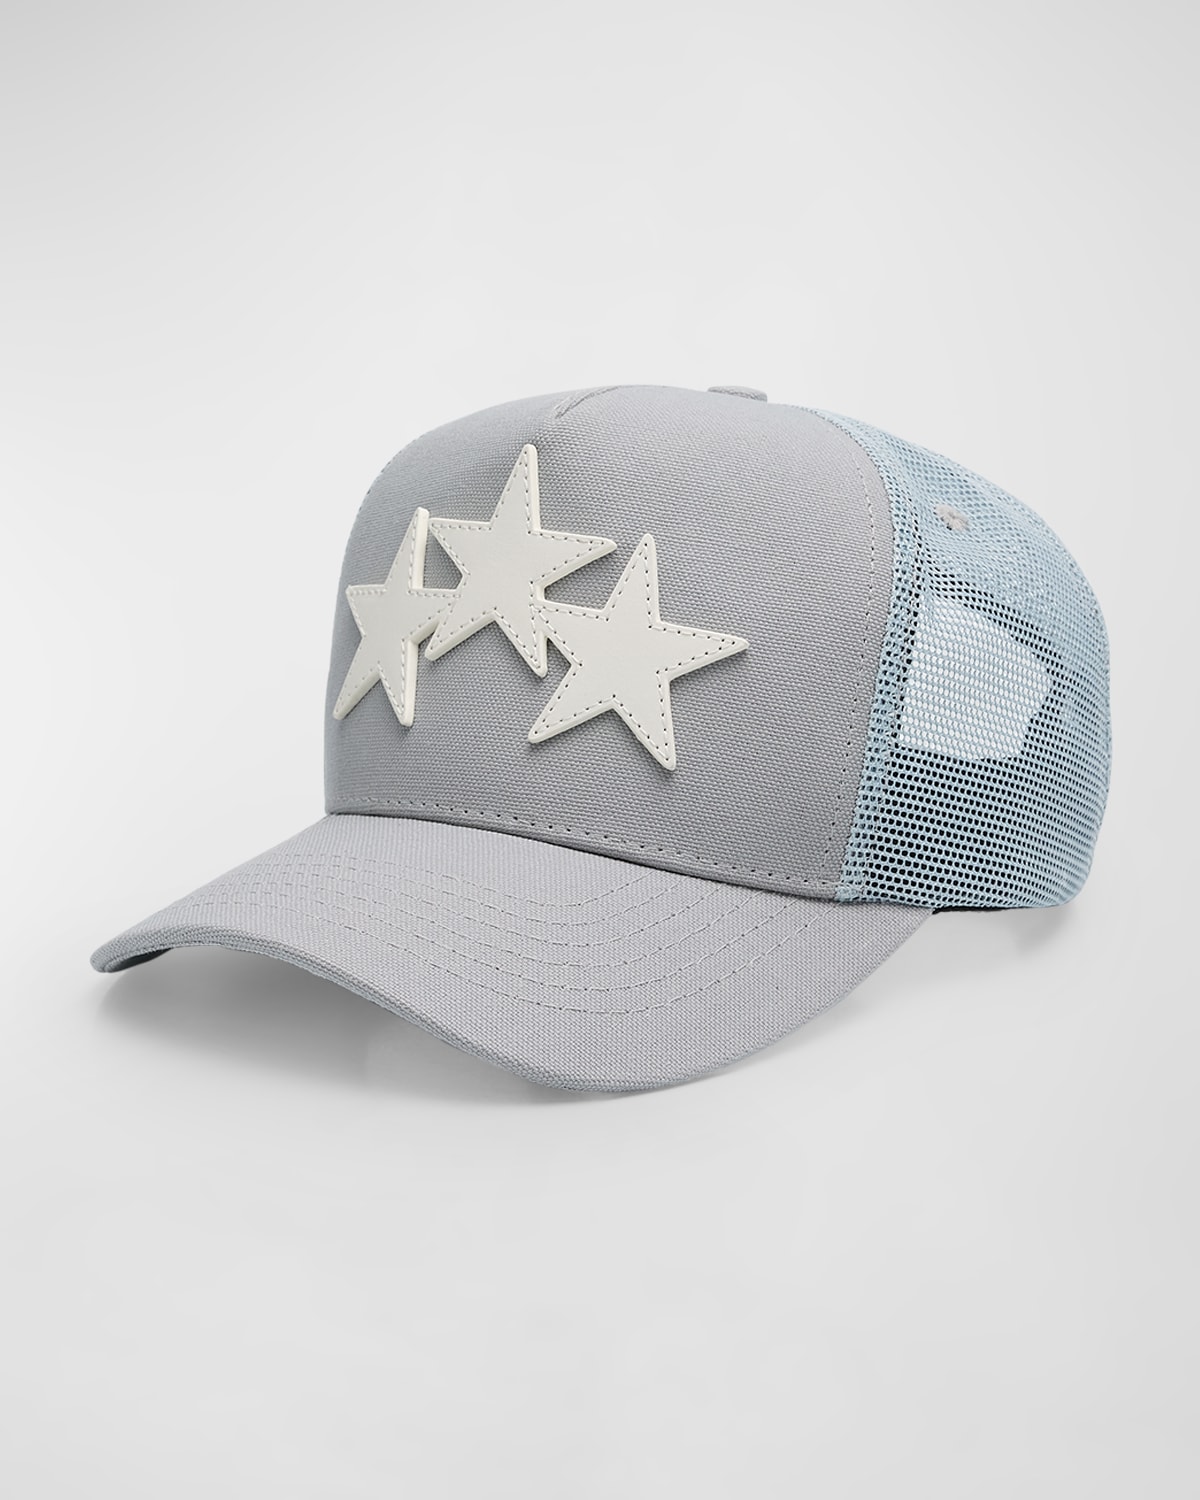 Men's Three Star Trucker Hat